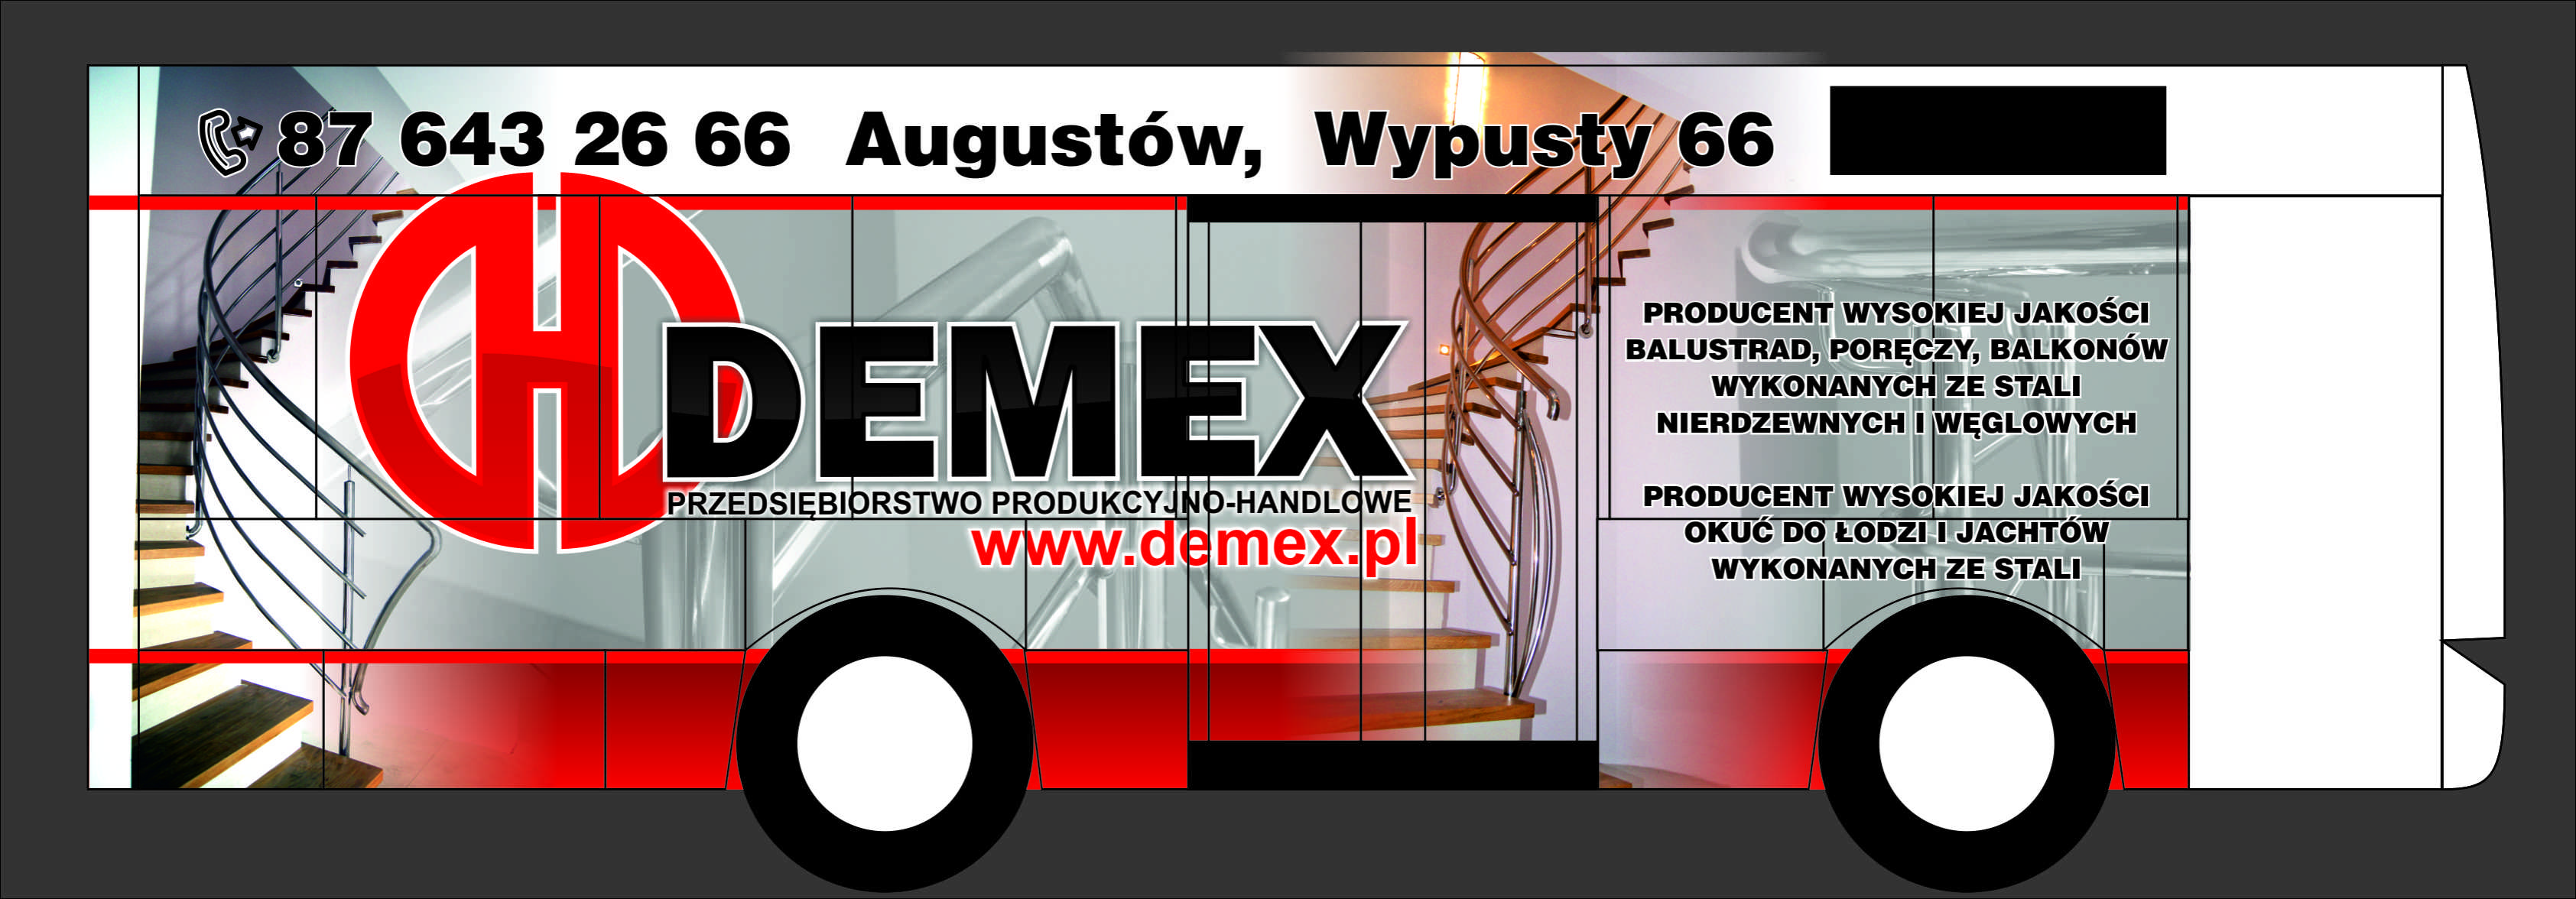 demex reklama autobus 1